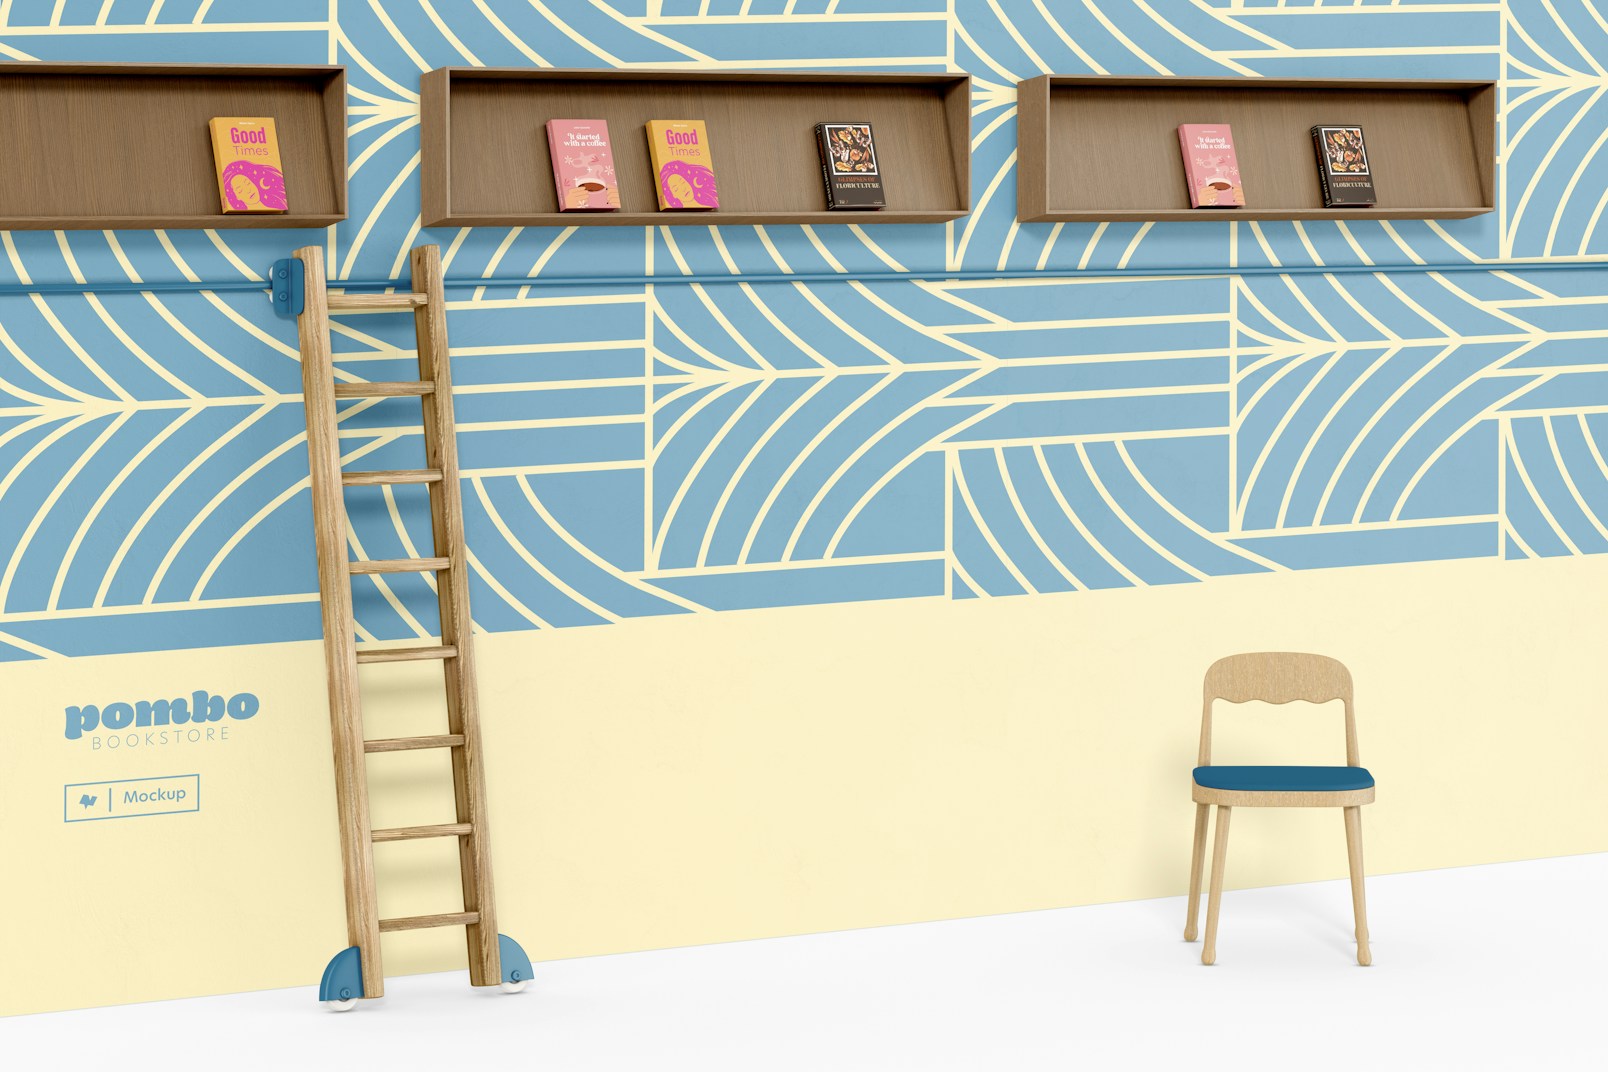 Modern Bookstore Wall Mockup, with Ladder